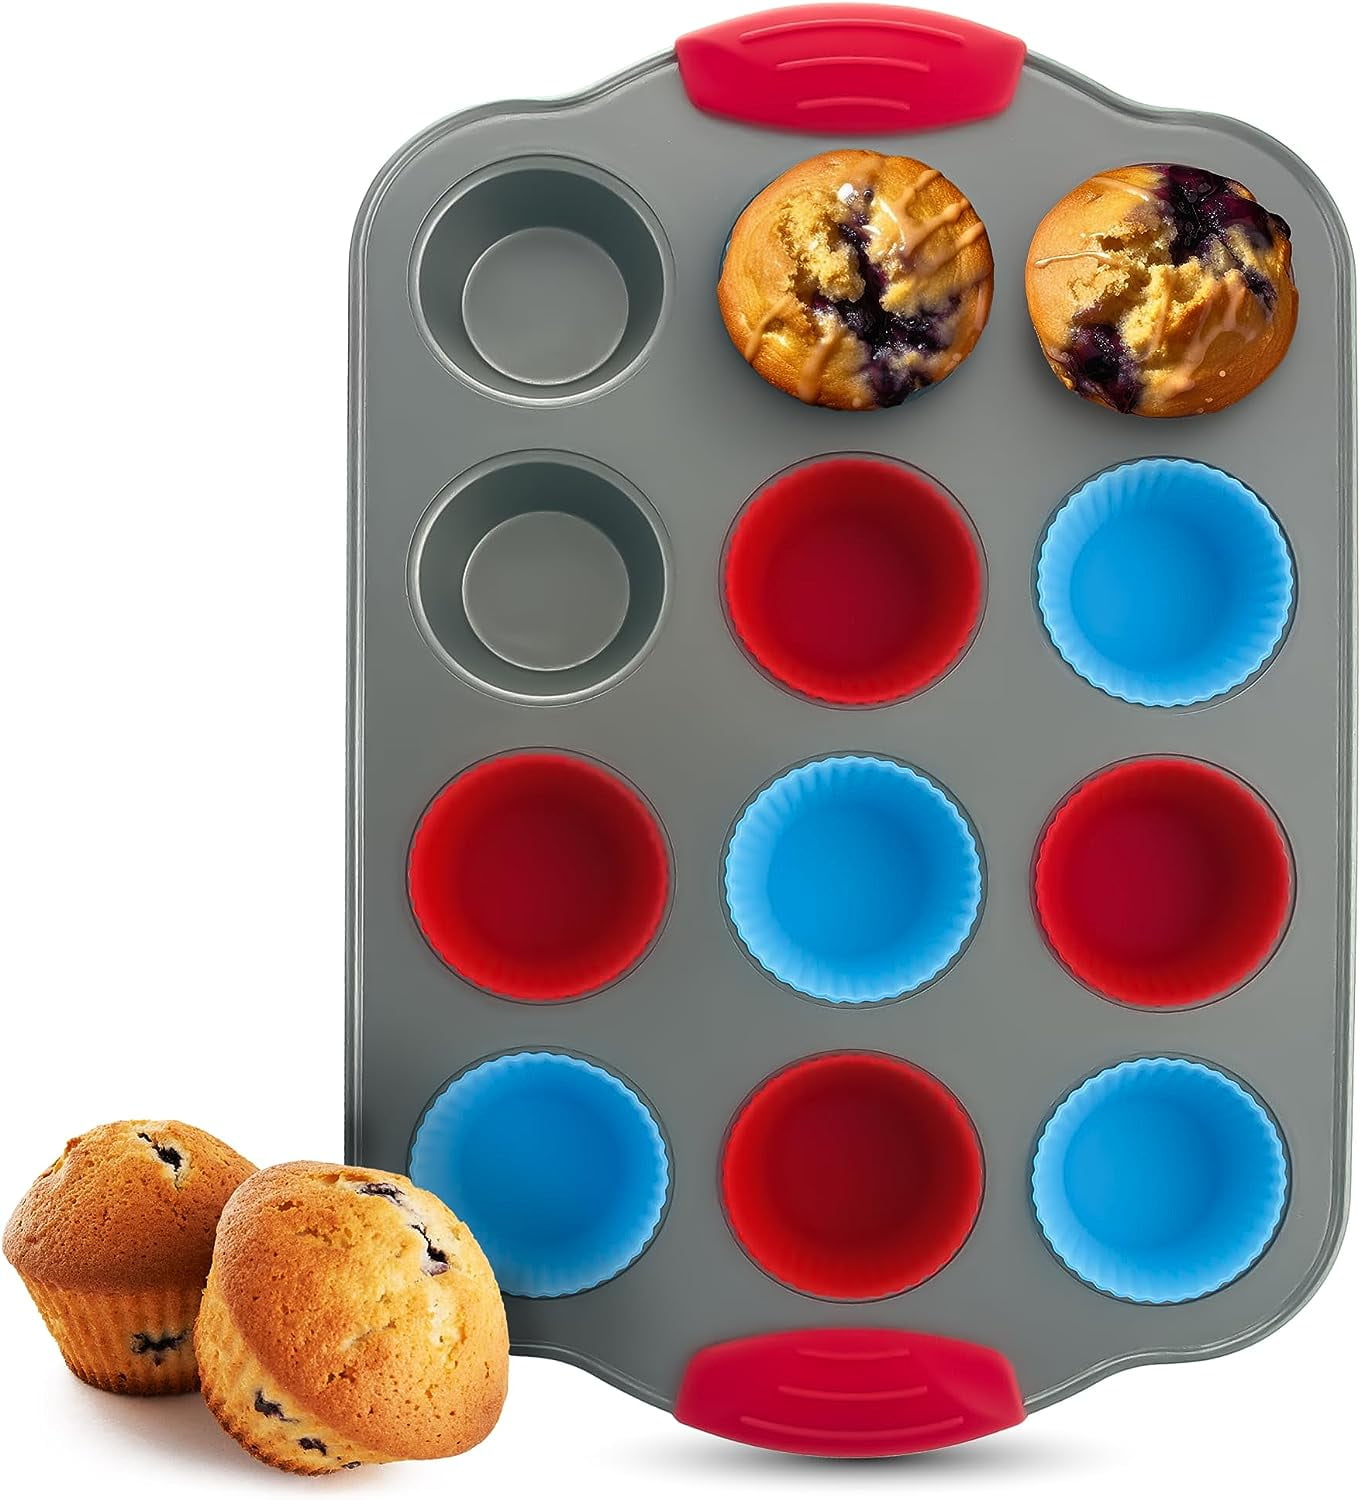 BAKE BOSS Silicone Mini Muffin Pan With Handles, 12 Cups Mini Cupcake Pan,  Silicone Muffin Cups For Baking, Eggs & Cupcakes, Non-Stick Silicone